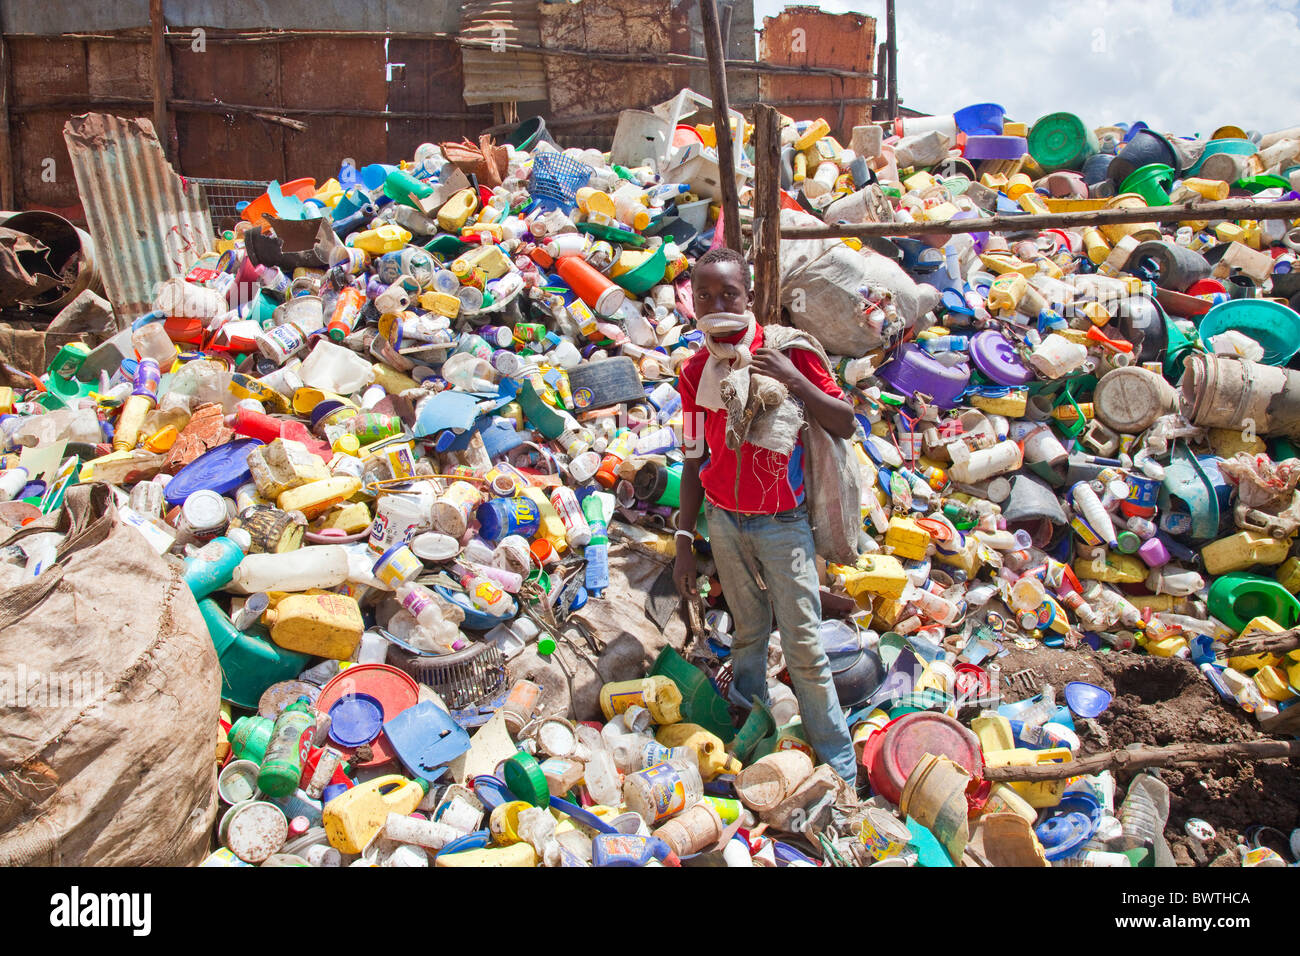 Boy scavenger at a recycling center in Nairobi, Kenya Stock Photo